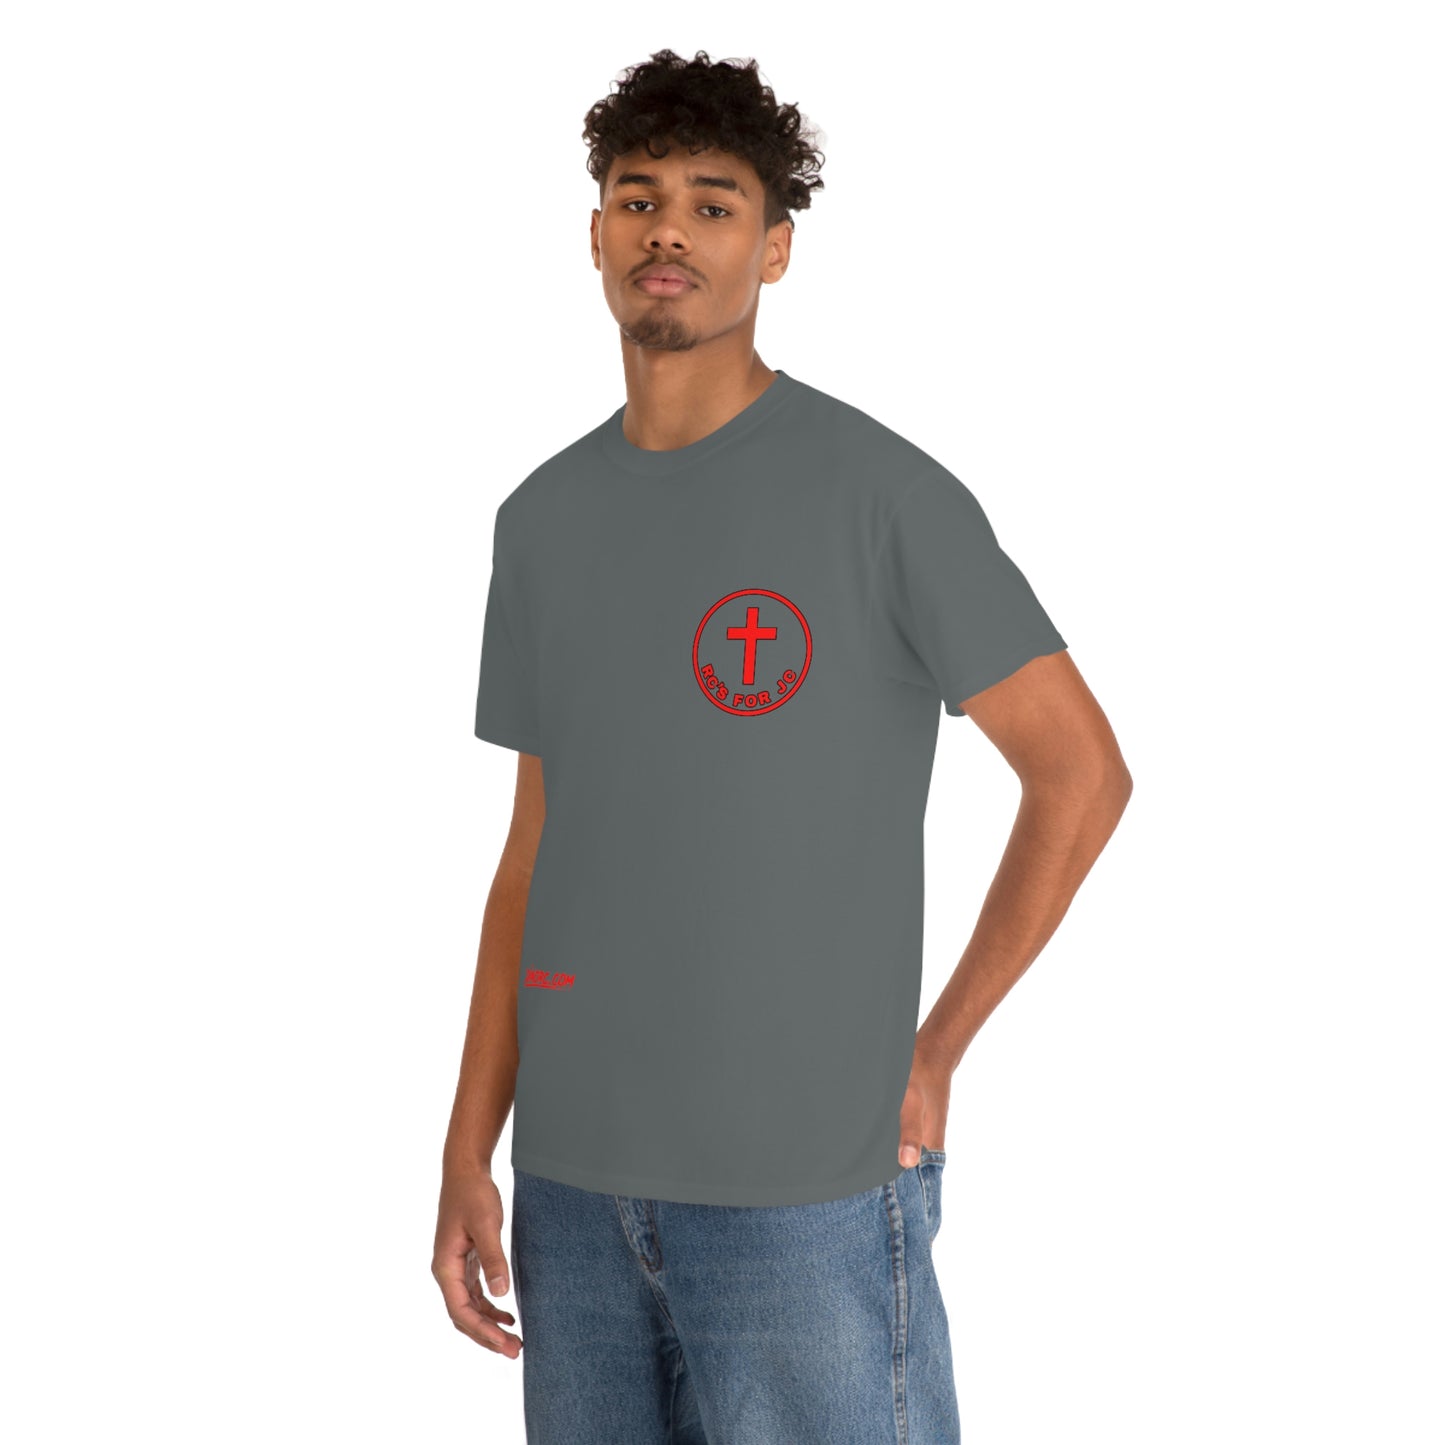 RCSFORJC  Front Back Red Logo T-Shirt S-5x